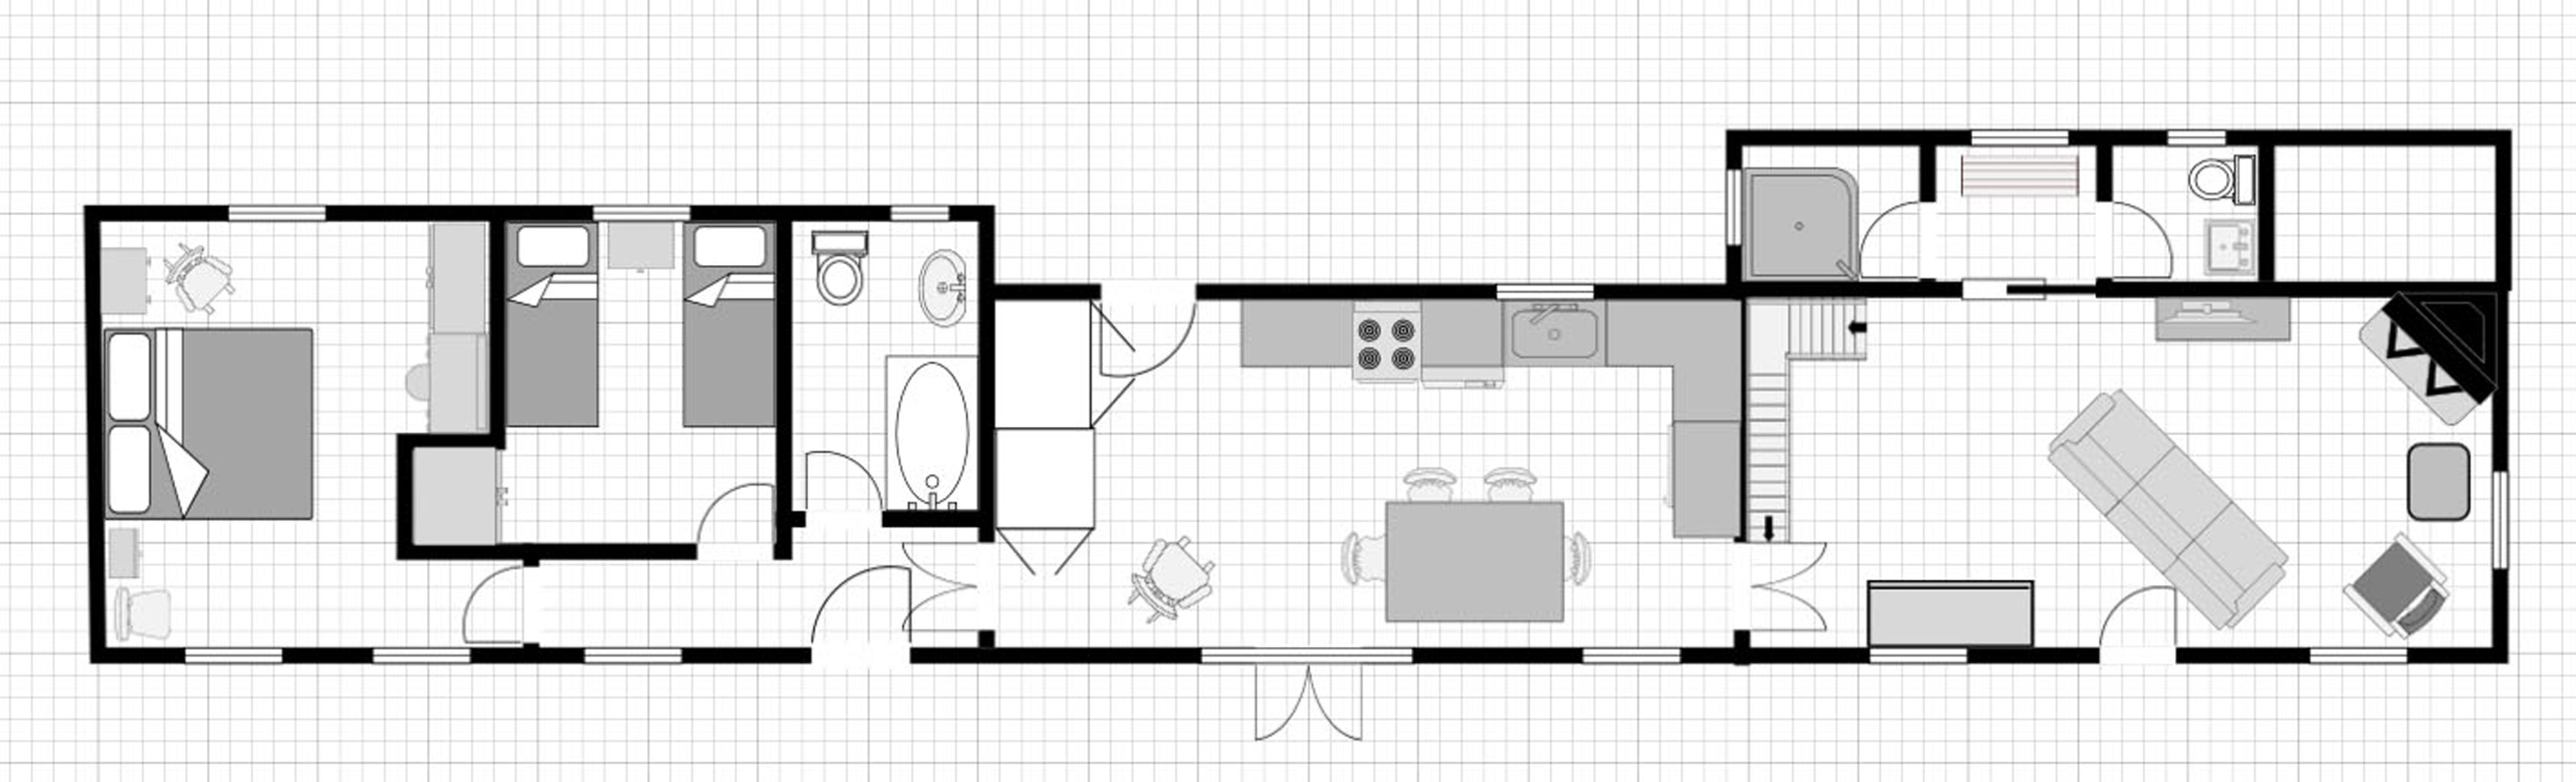 Ground floor plan (Upstairs gallery not shown)